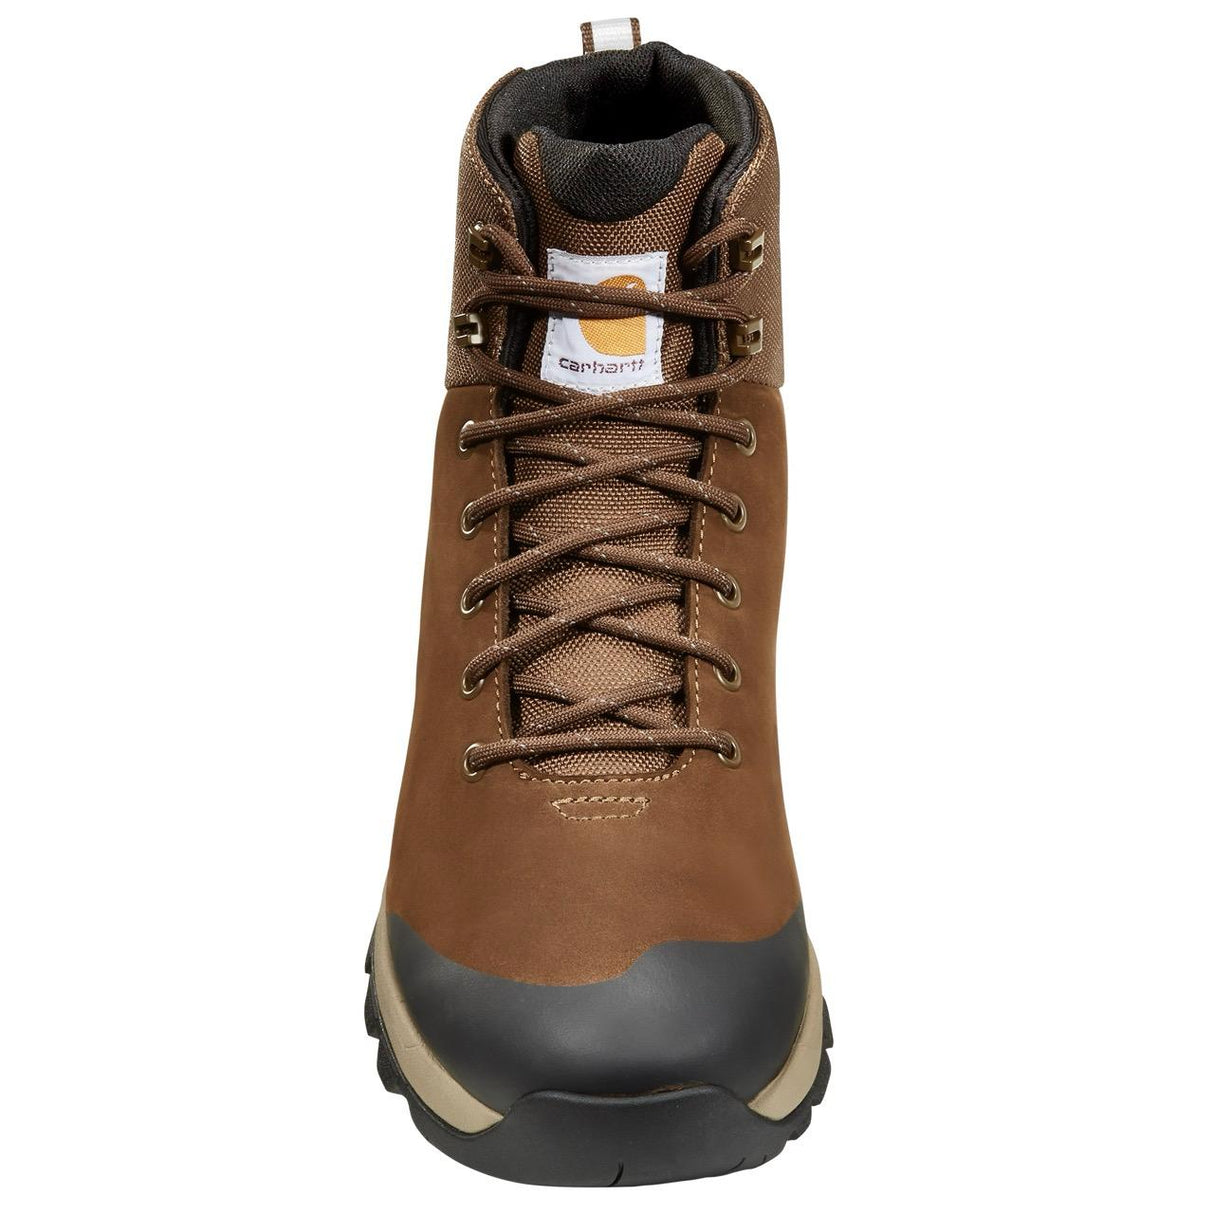 Carhartt-Carhartt Outdoor Wp 5" Soft Toe Dark Brown Hiker Boot-Steel Toes-6